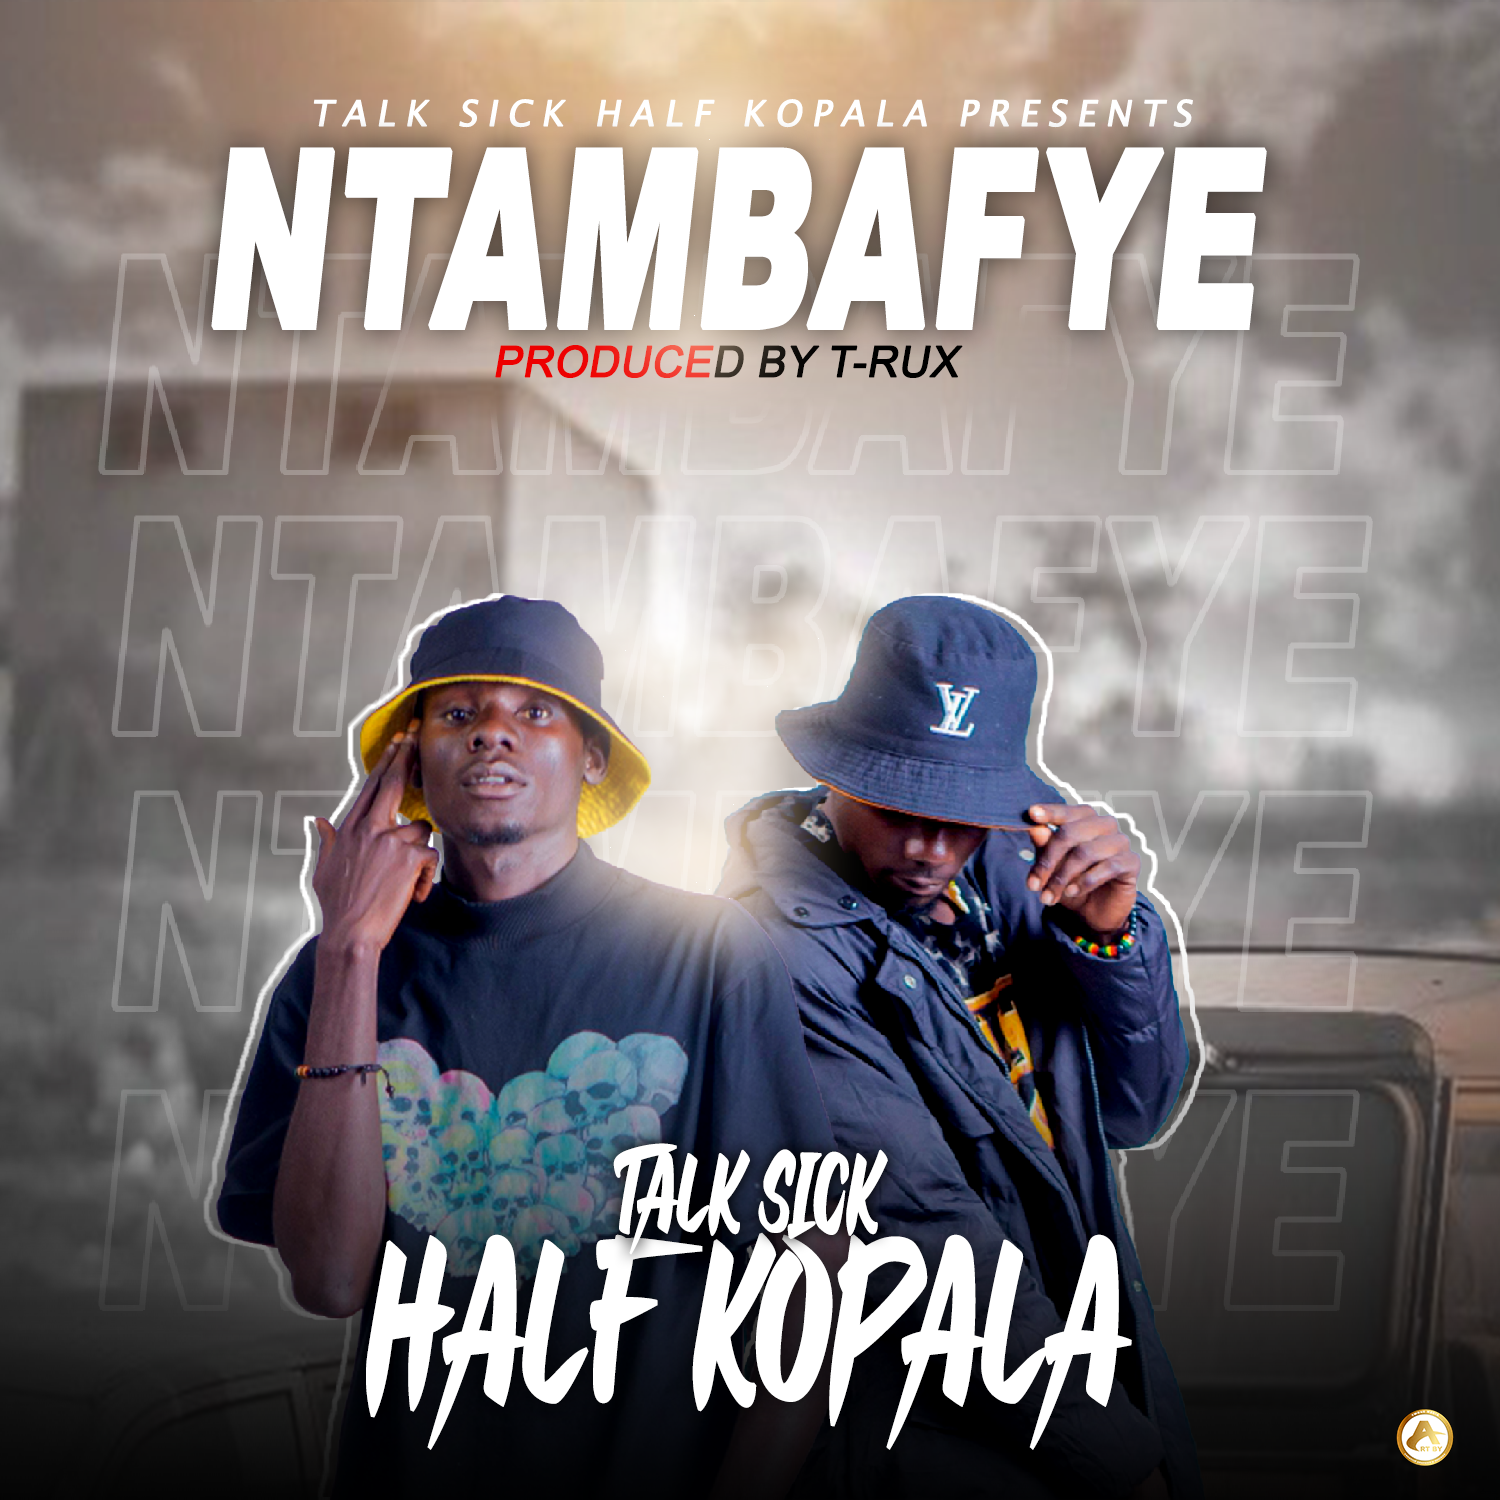 Talksick Half Kopala - Ntambafye